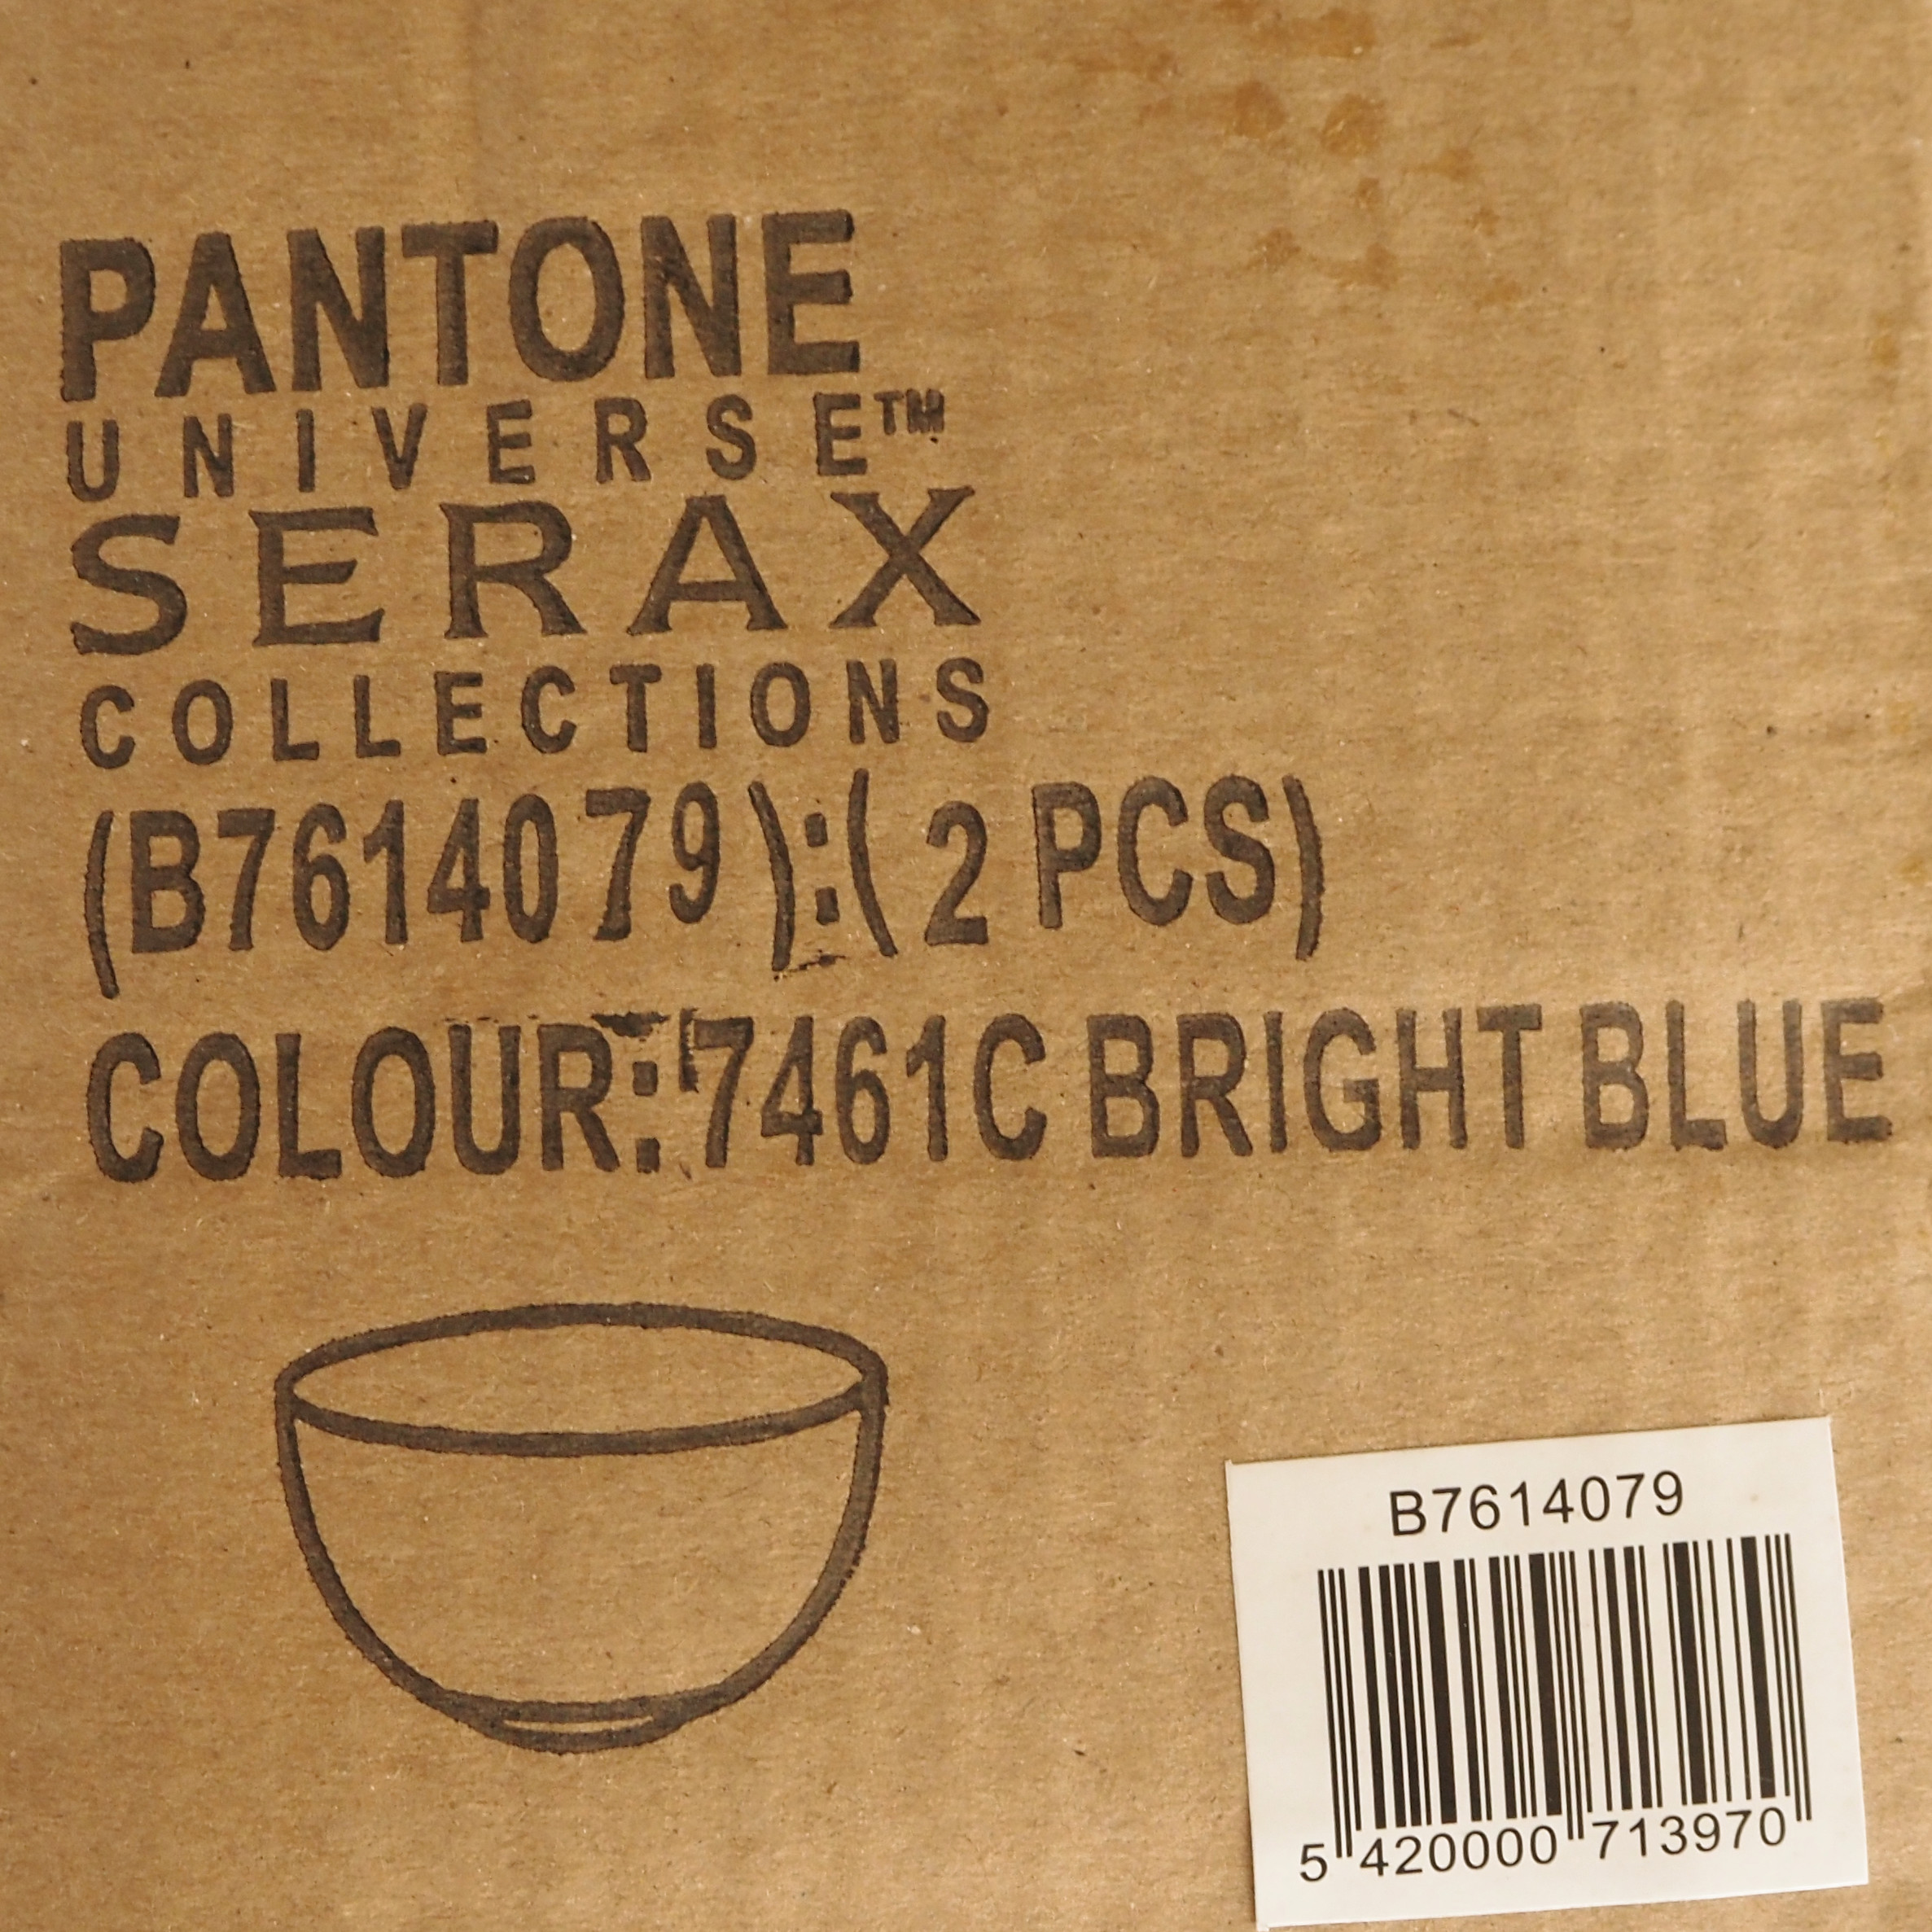 Box of 2 bowls 'Pantone' by Luca Trazzi for Serax - Bright blue